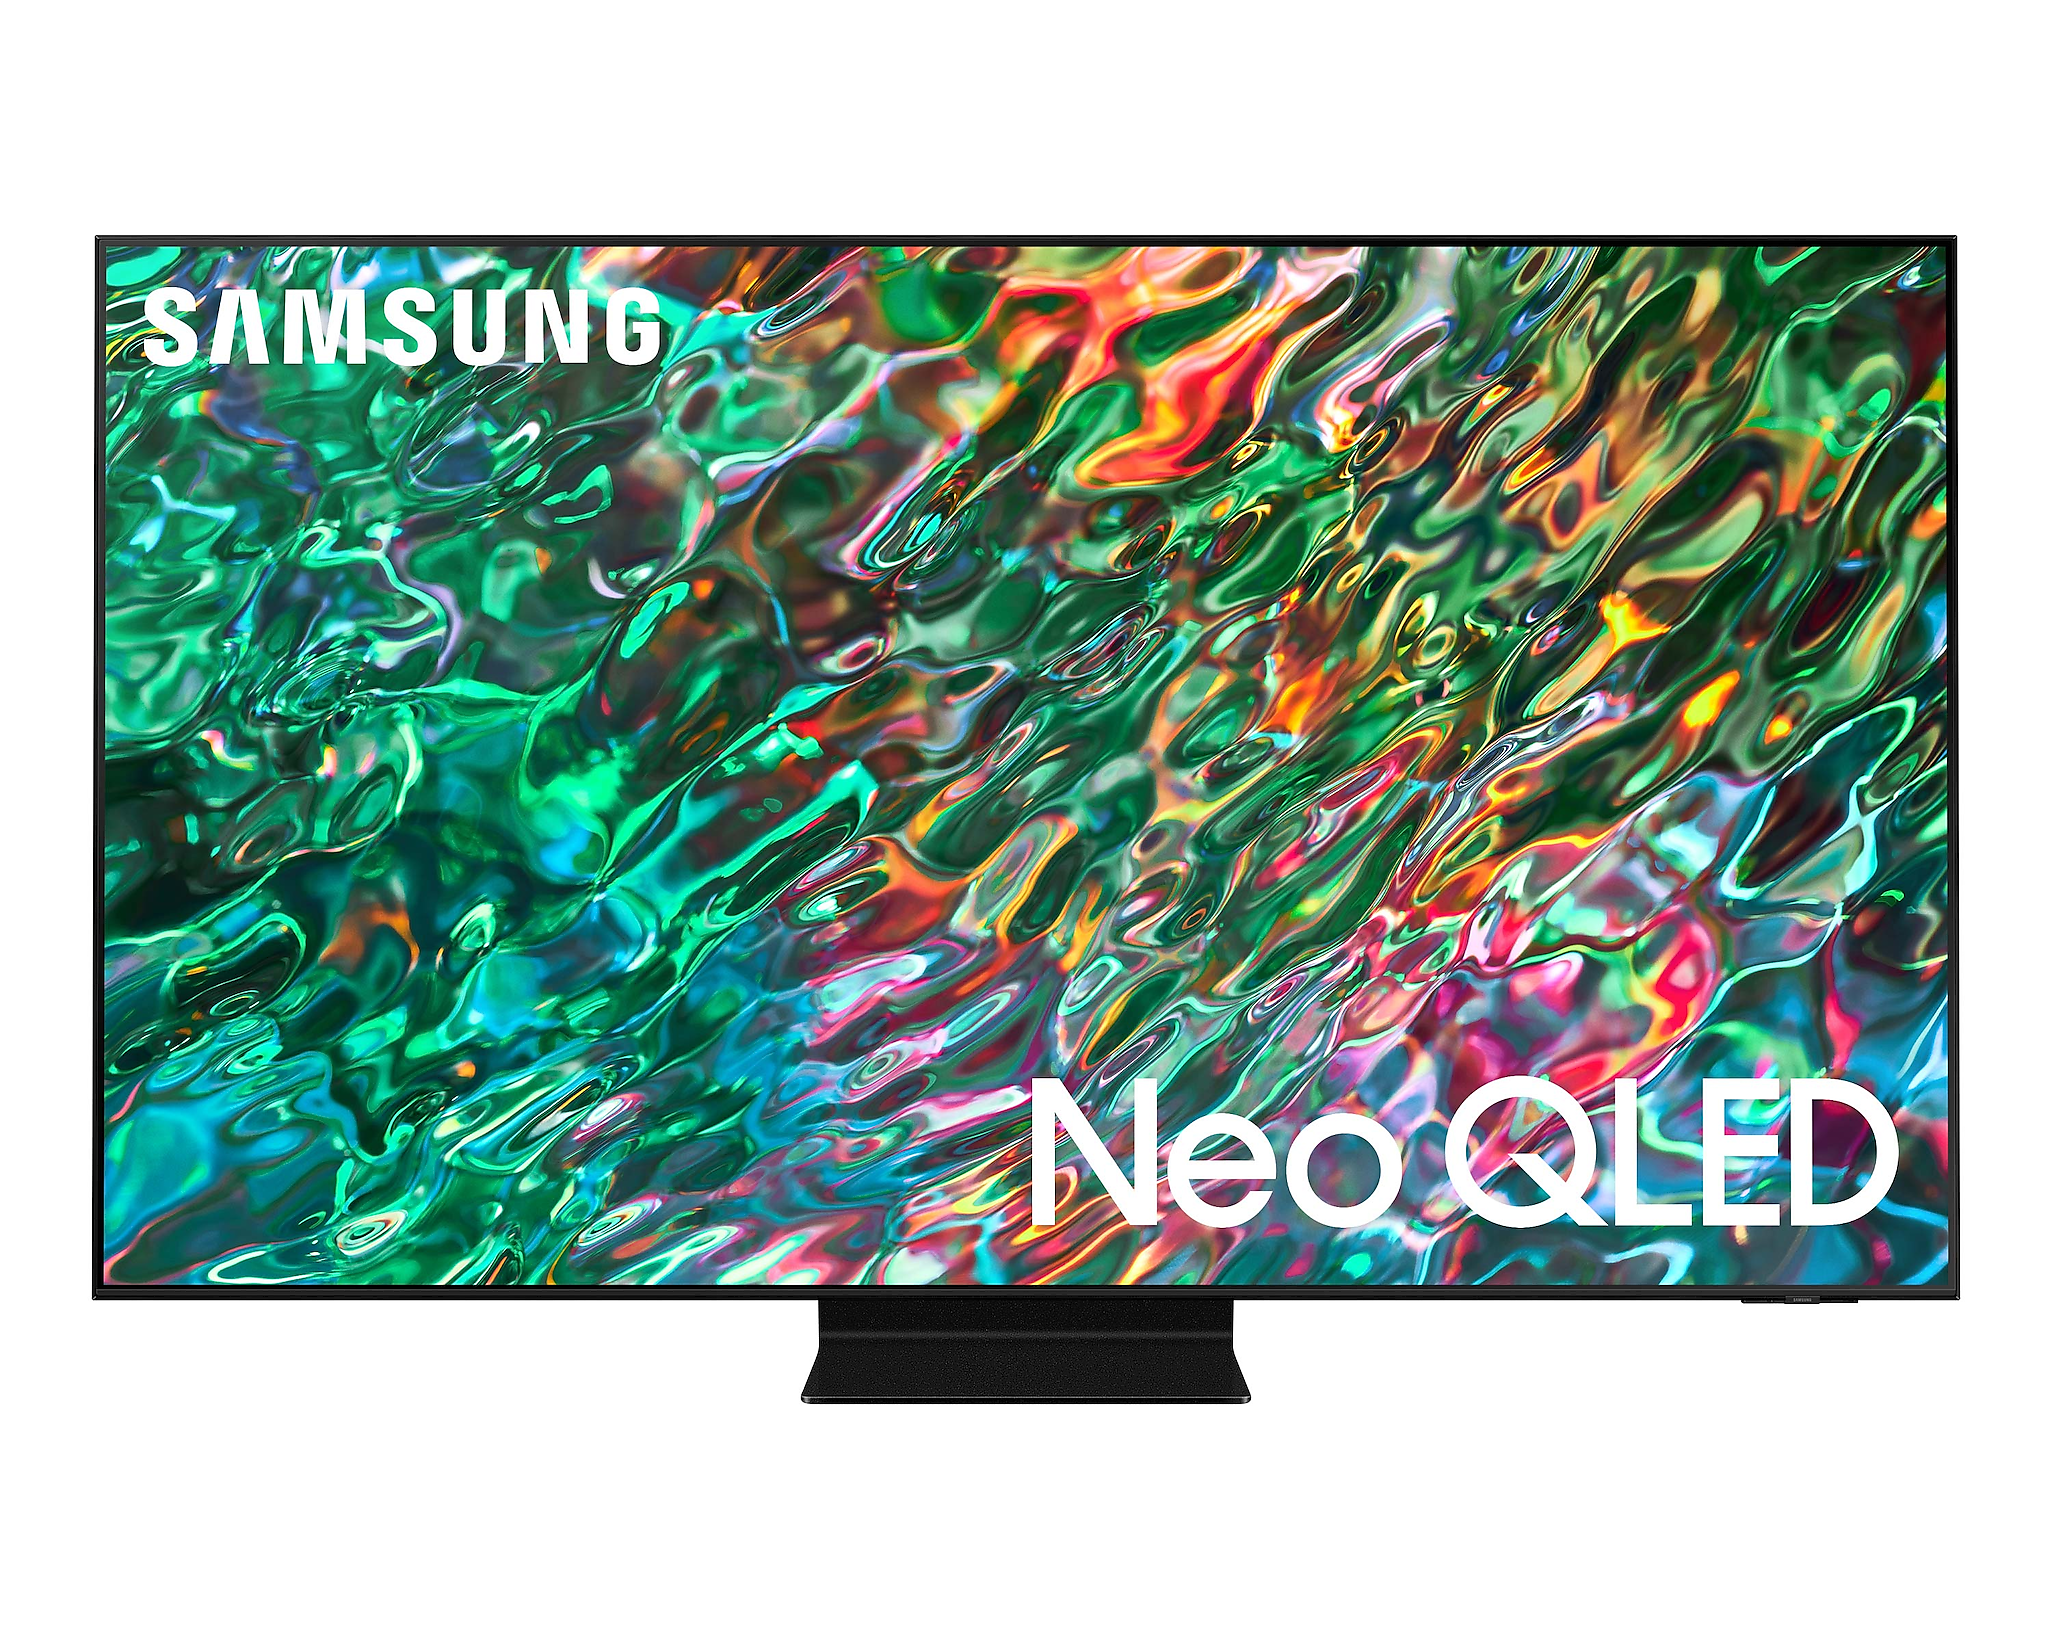 1m 38cm (55") Neo QLED 4K Smart TV QN90B